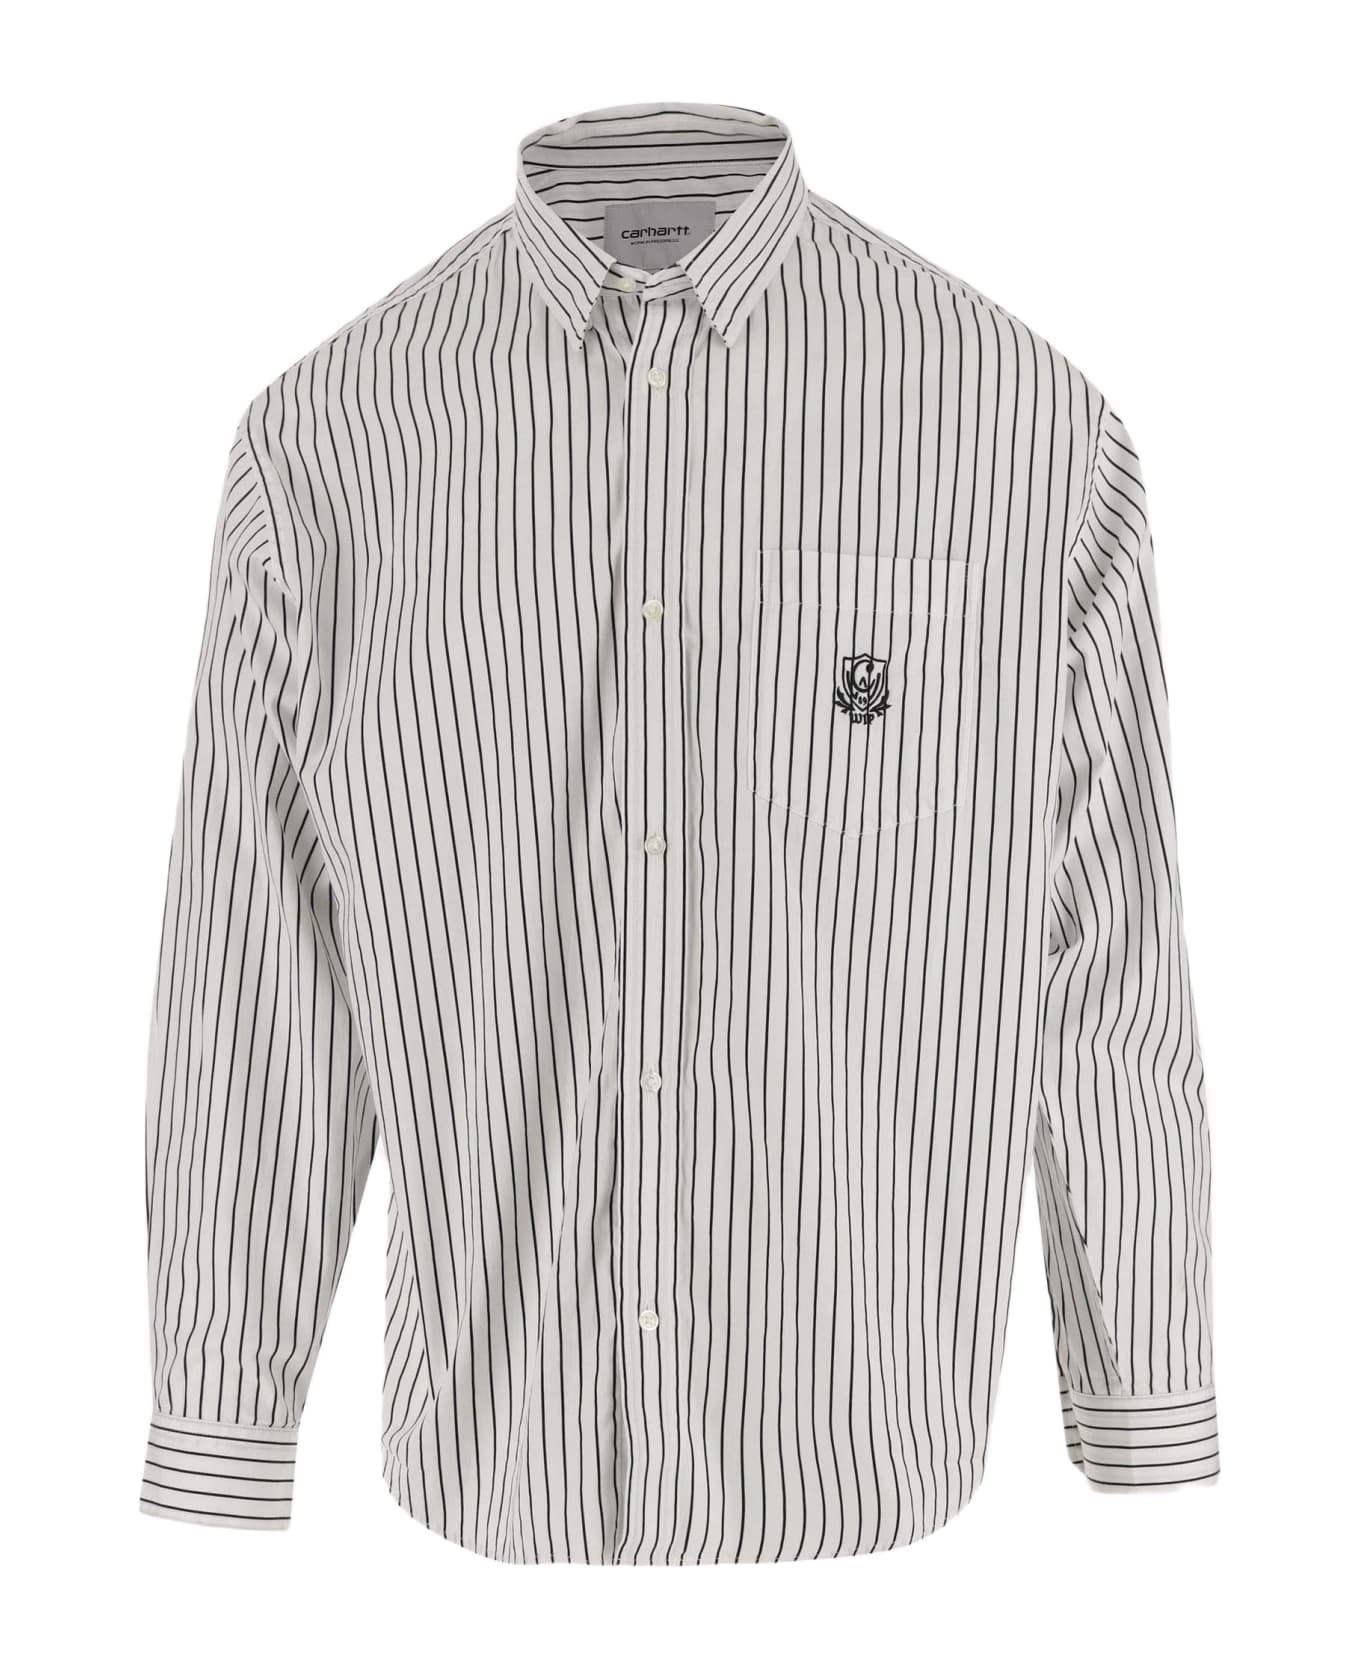 Carhartt Cotton Shirt With Striped Pattern - Bianco